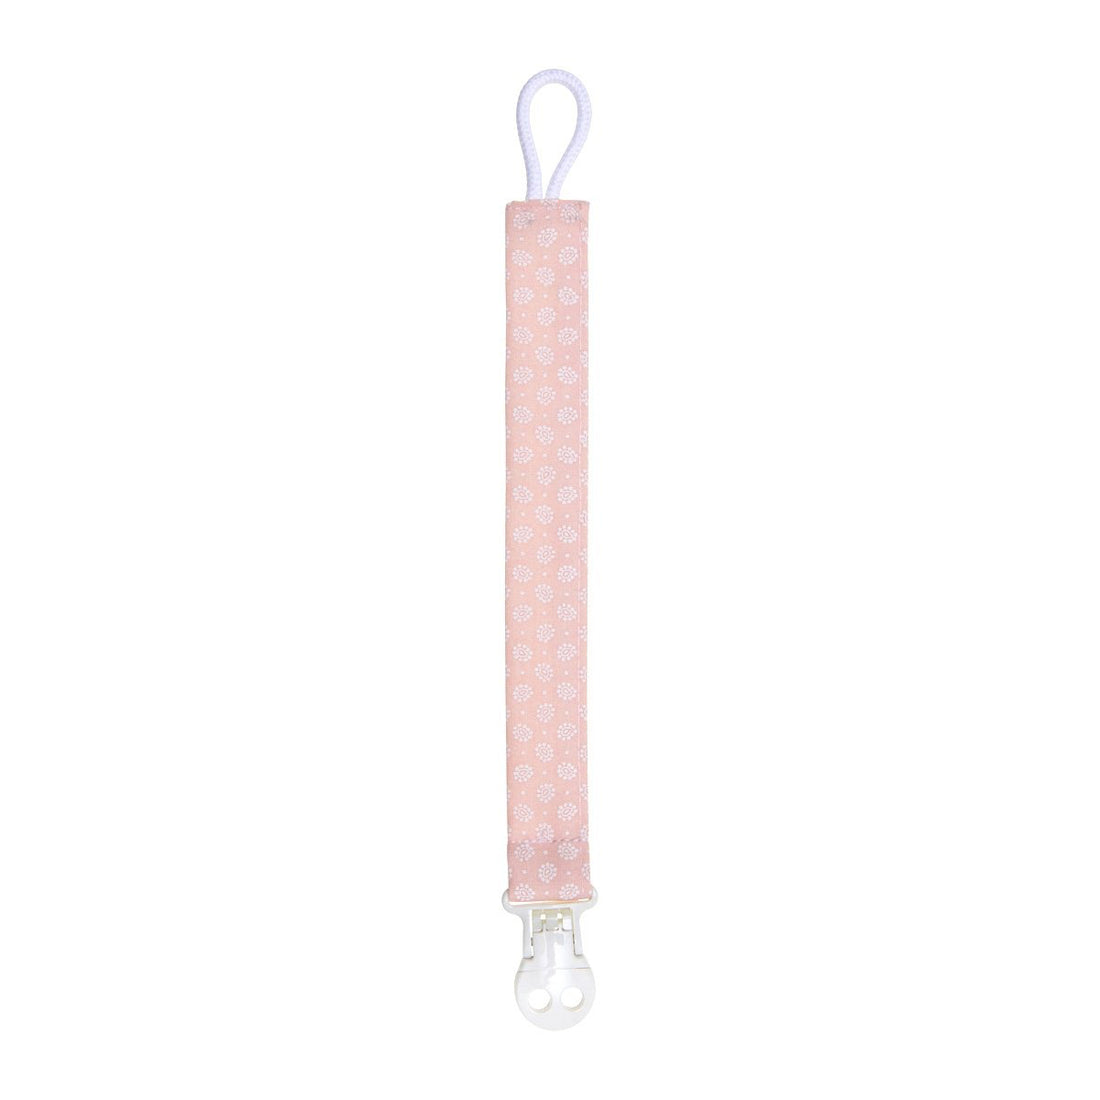 cambrass-dummy-tape-holder-astra-pink-flower-2x21-5cm-rjc-43347- (1)